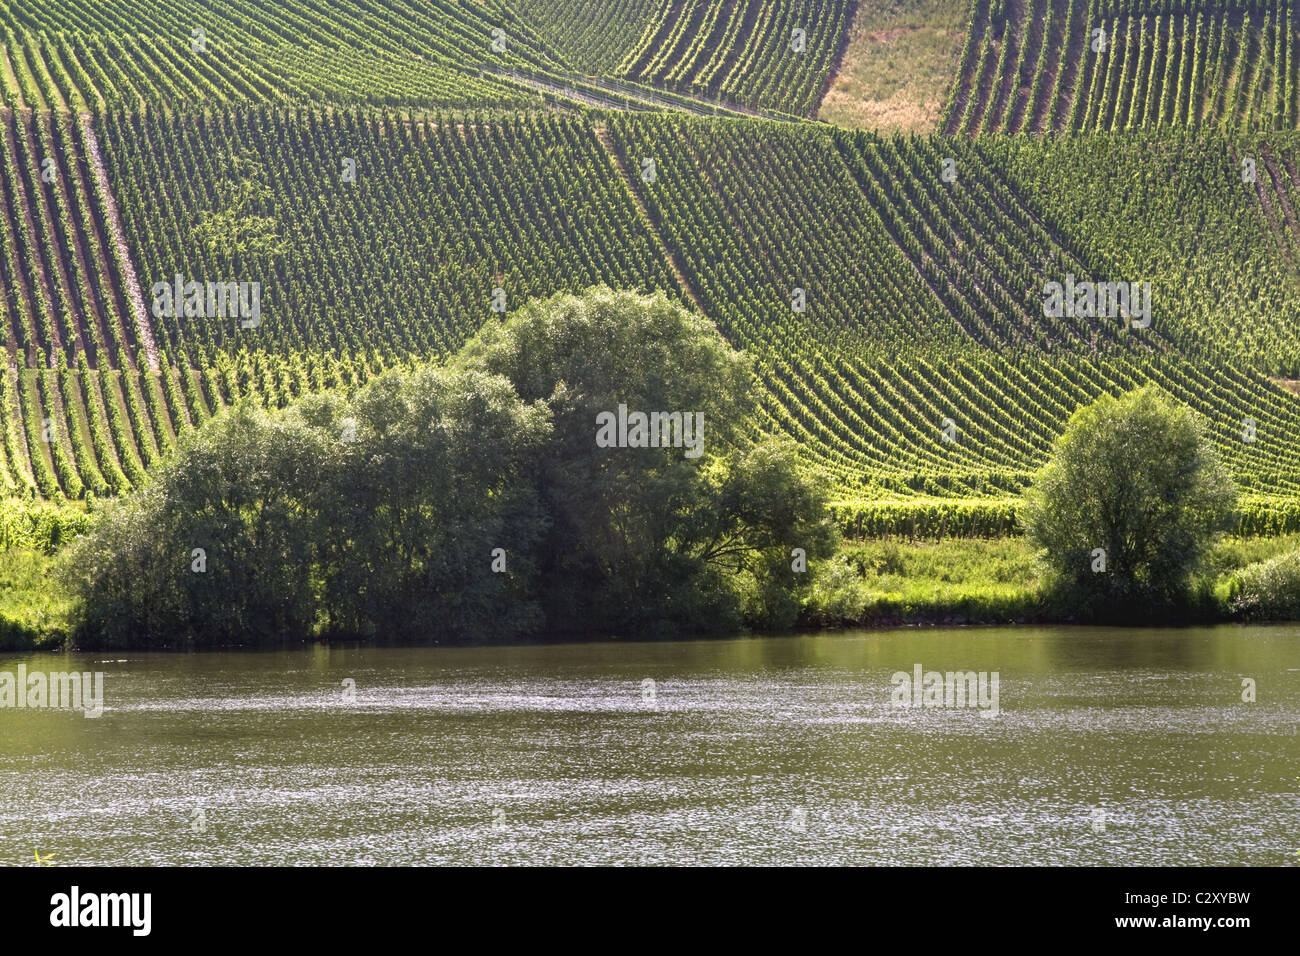 Vineyard, Neumagen, Moselle, Germany Stock Photo